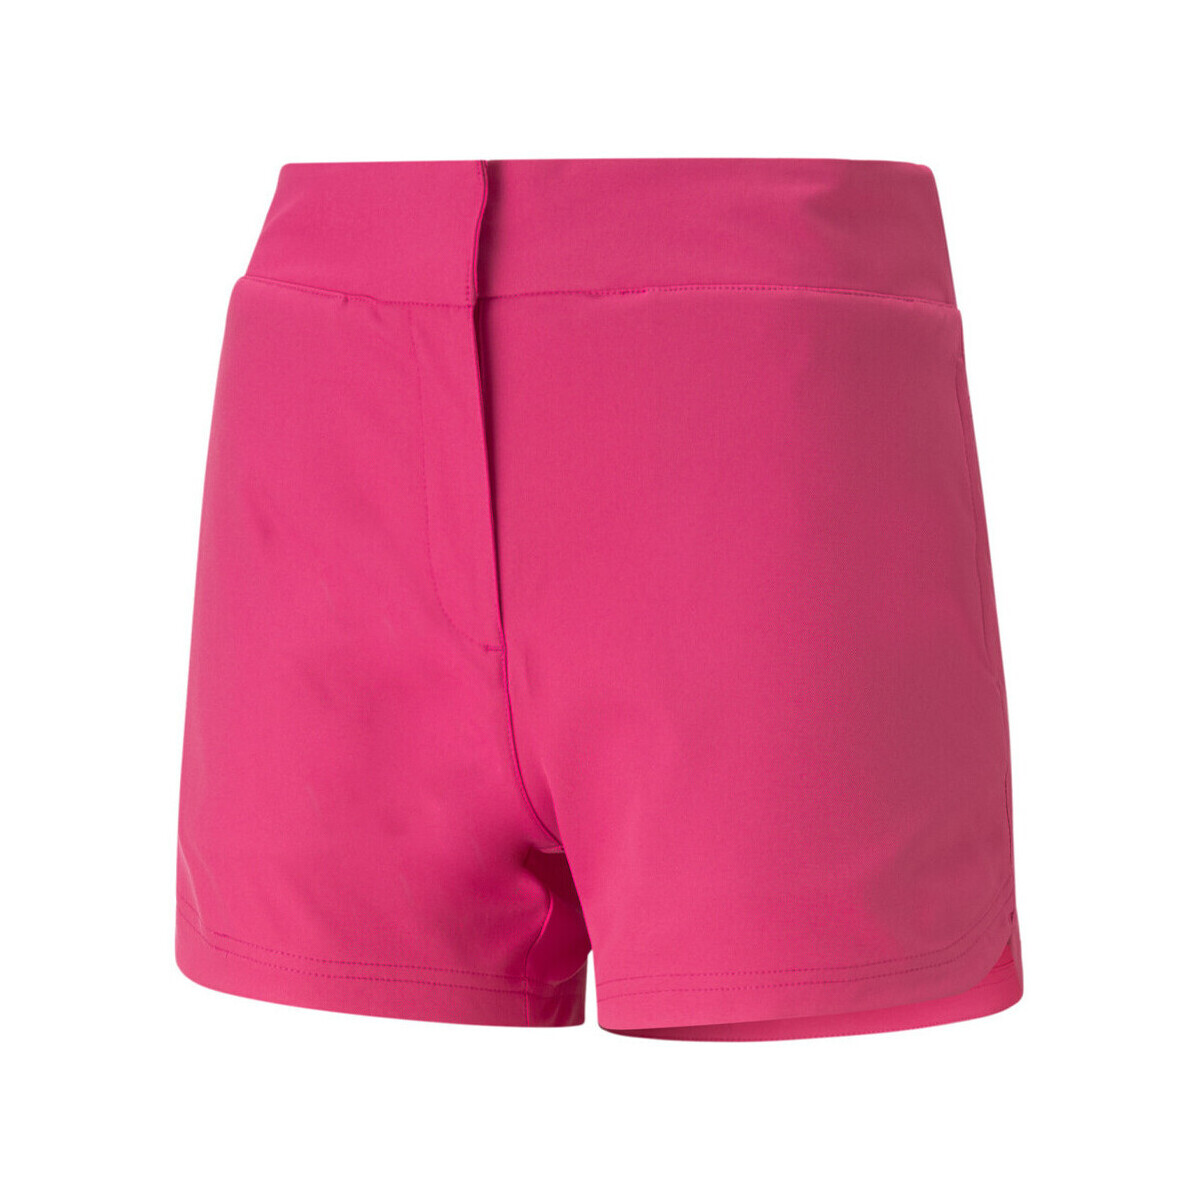 Textil Mulher Shorts / Bermudas Puma  Rosa